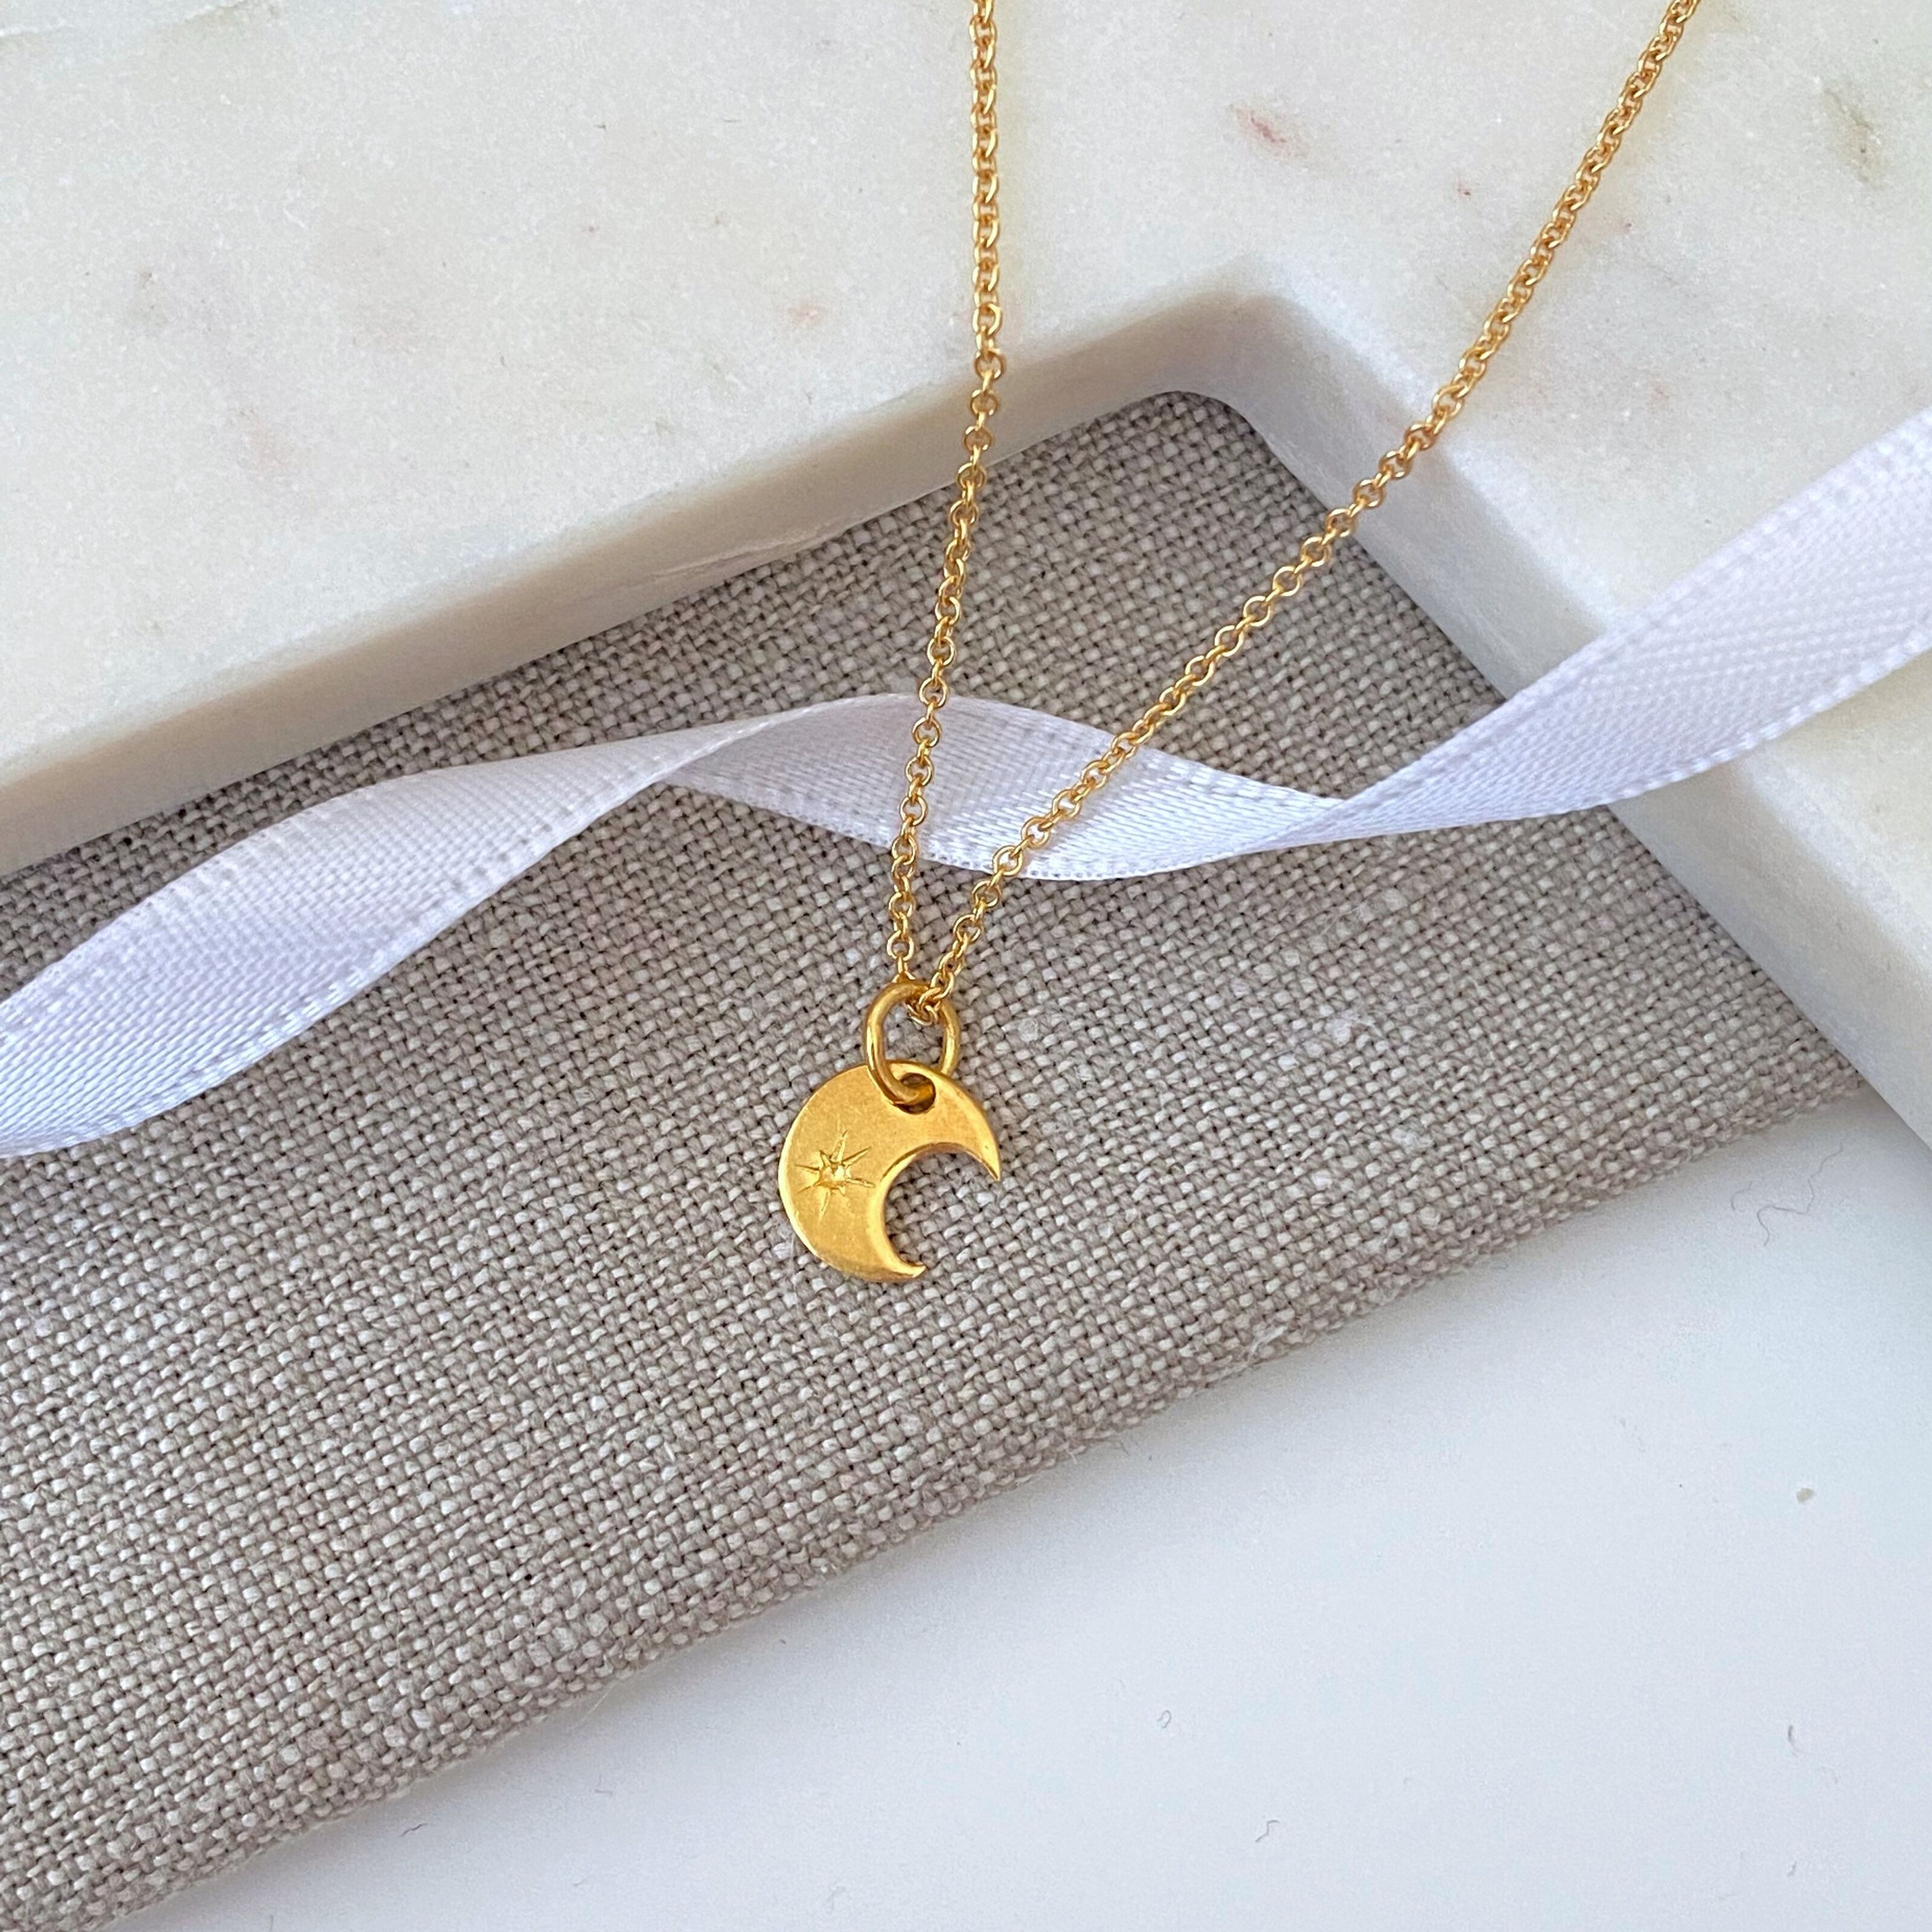 Stellar Eclipse Diamond Pendant Necklace in 14K Gold Vermeil on